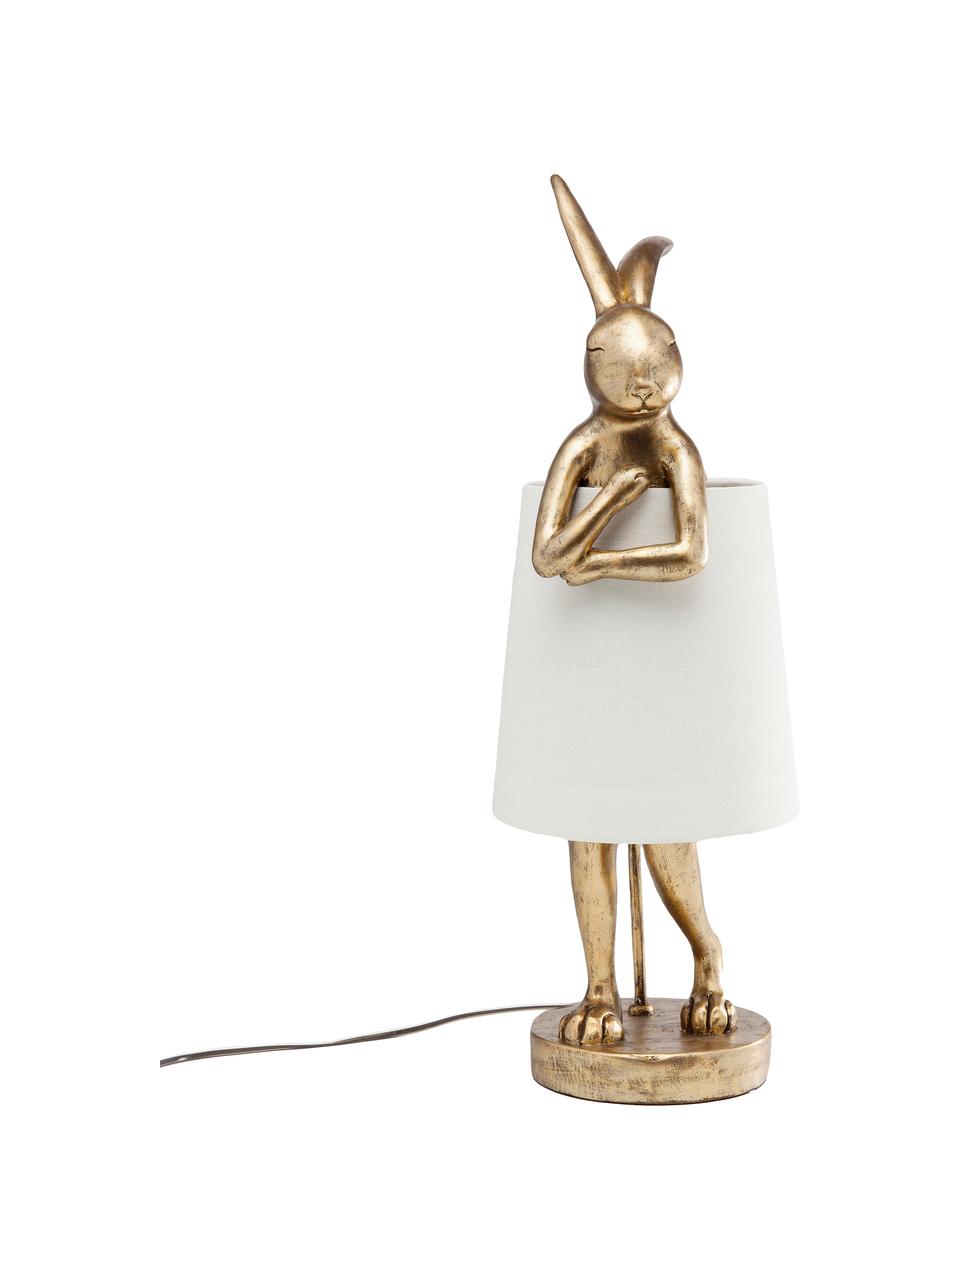 Grote design tafellamp Rabbit in goudkleur, Lampenkap: linnen, Lampvoet: polyresin, Stang: gepoedercoat staal, Wit, goudkleurig, Ø 23 x H 68 cm